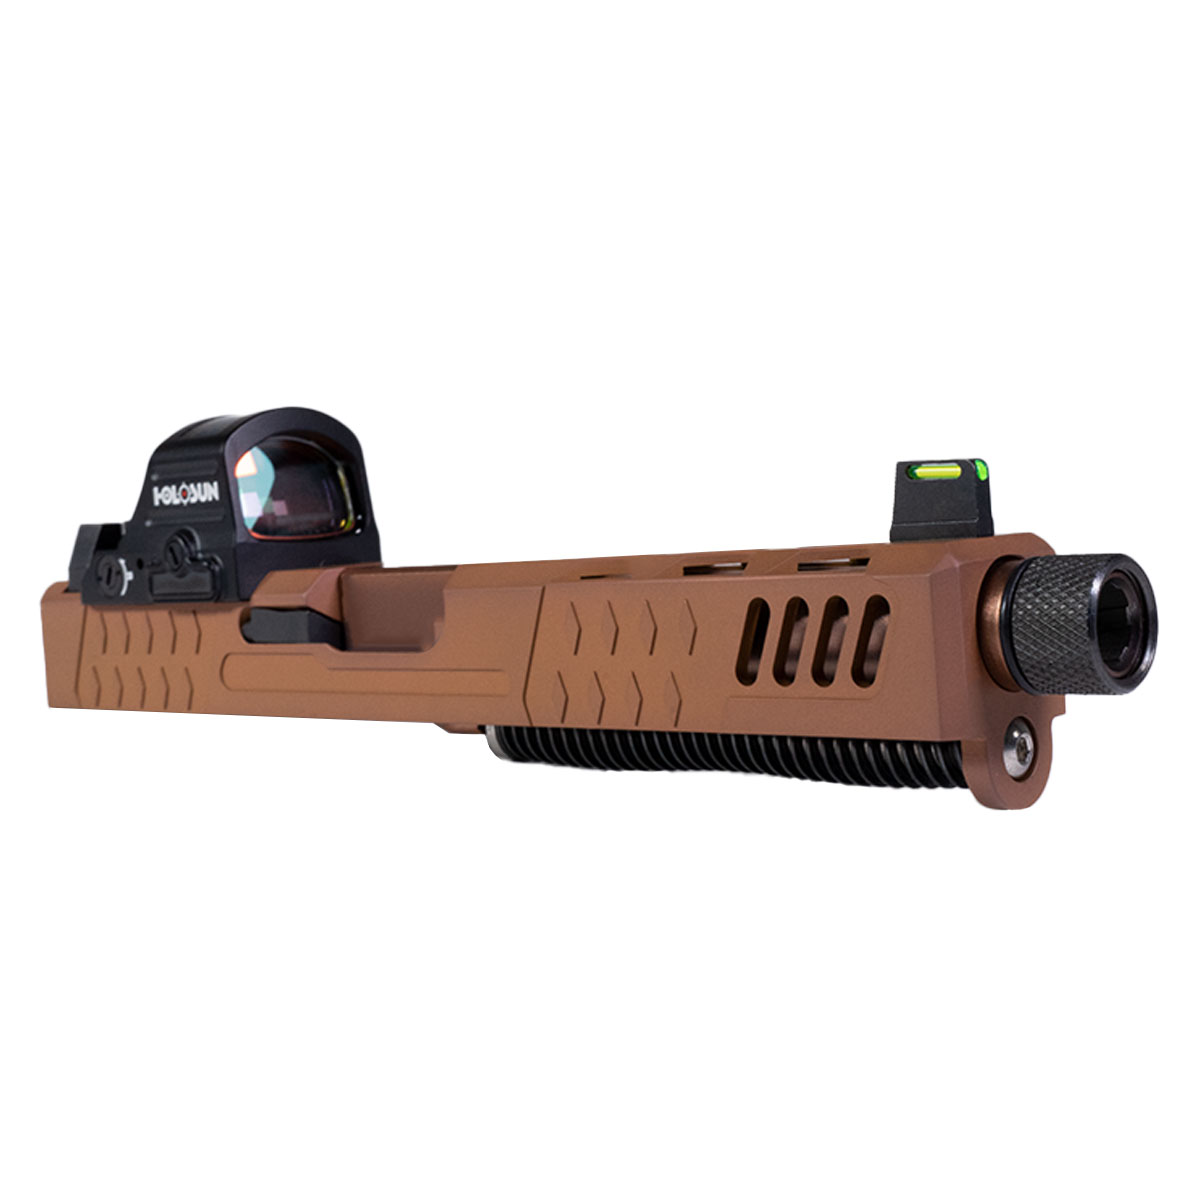 MMC 'Good Intentions' 9mm Complete Slide Kit - Glock 17 Gen 1-3 Compatible - Fire Sale